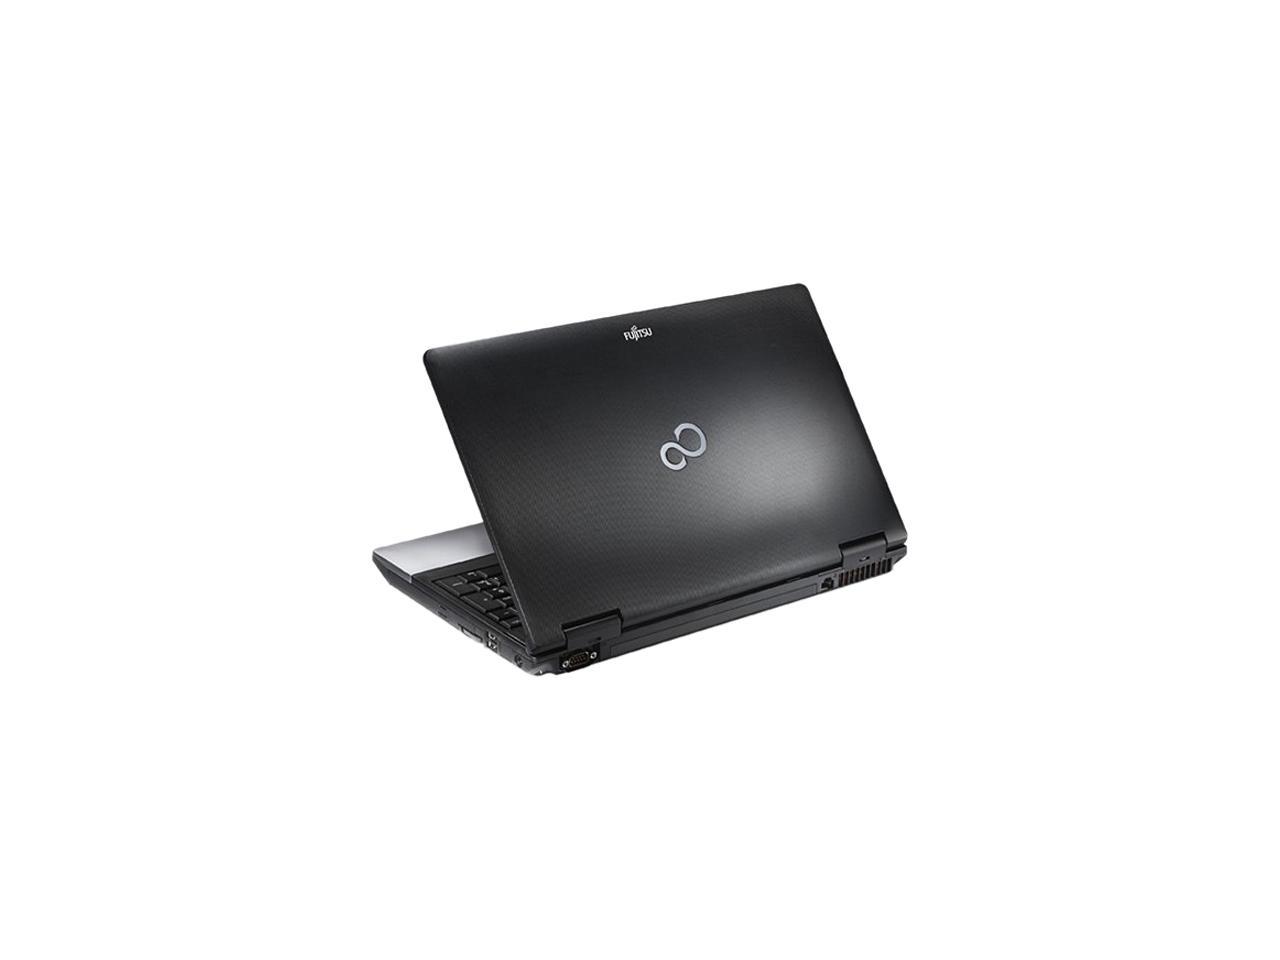 Fujitsu Laptop LifeBook Intel Core i5 3rd Gen 3230M (2.60GHz) 4GB 